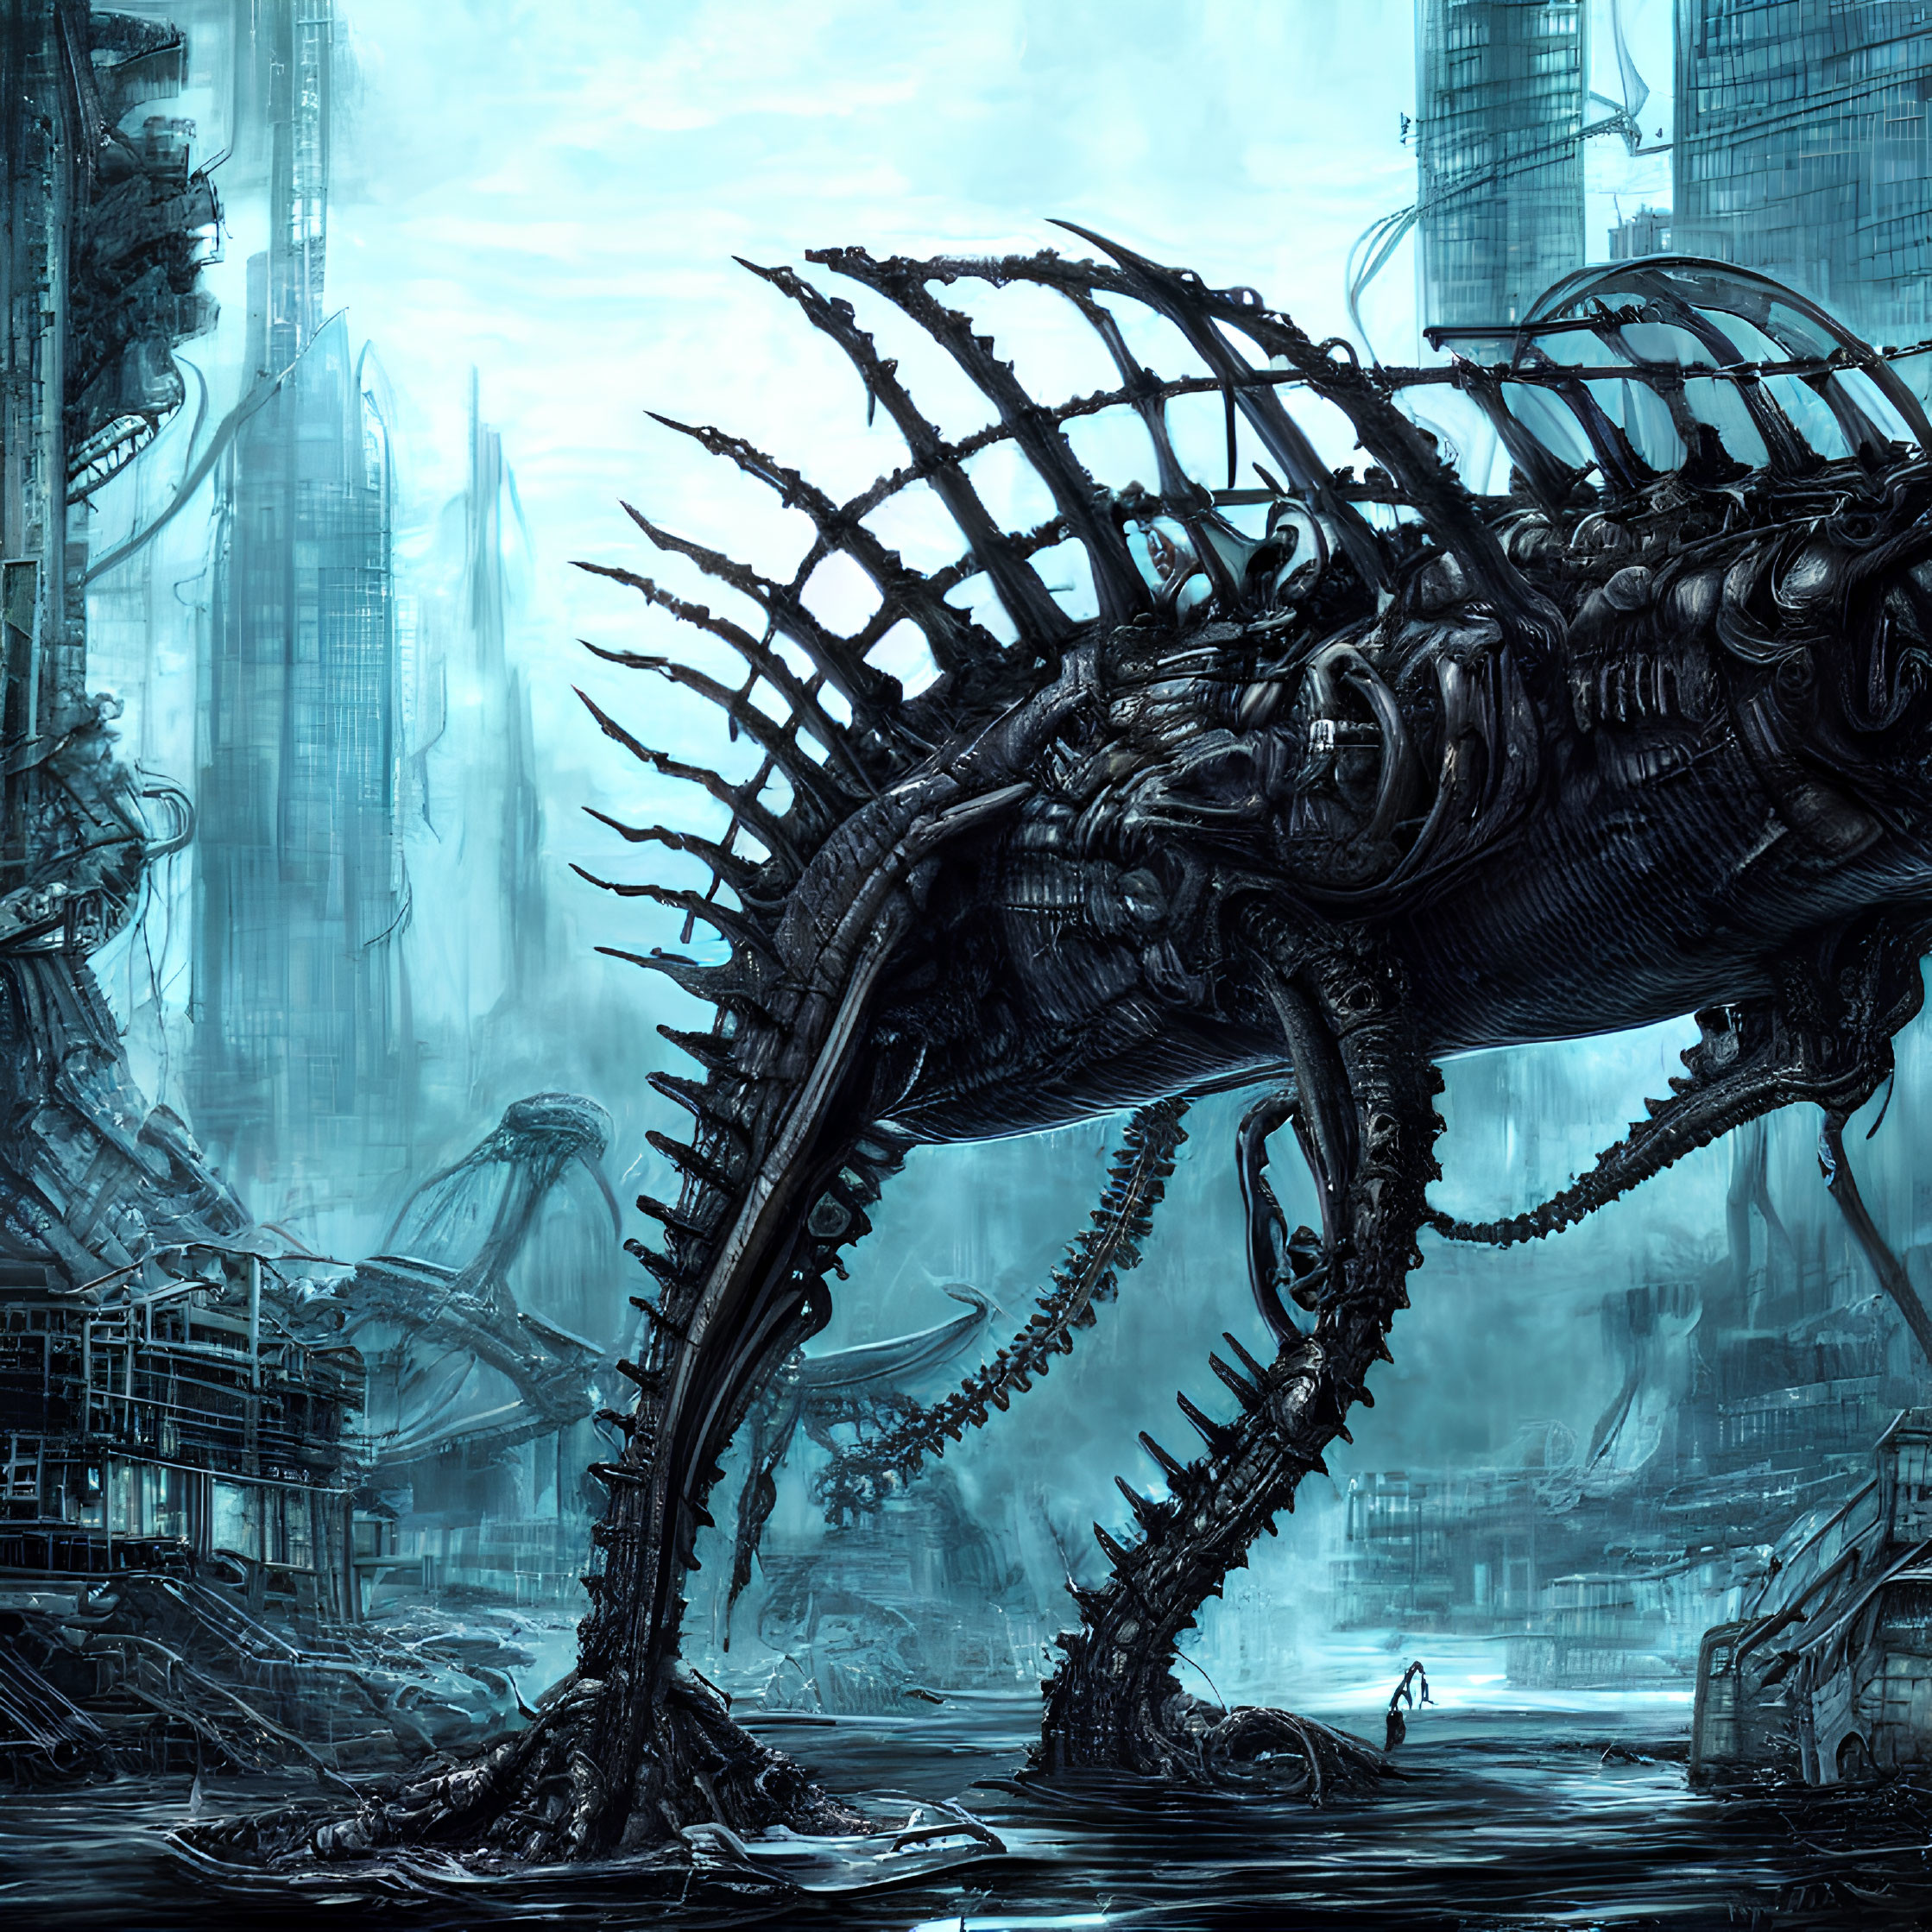 Giant biomechanical creature in futuristic cityscape with human figure